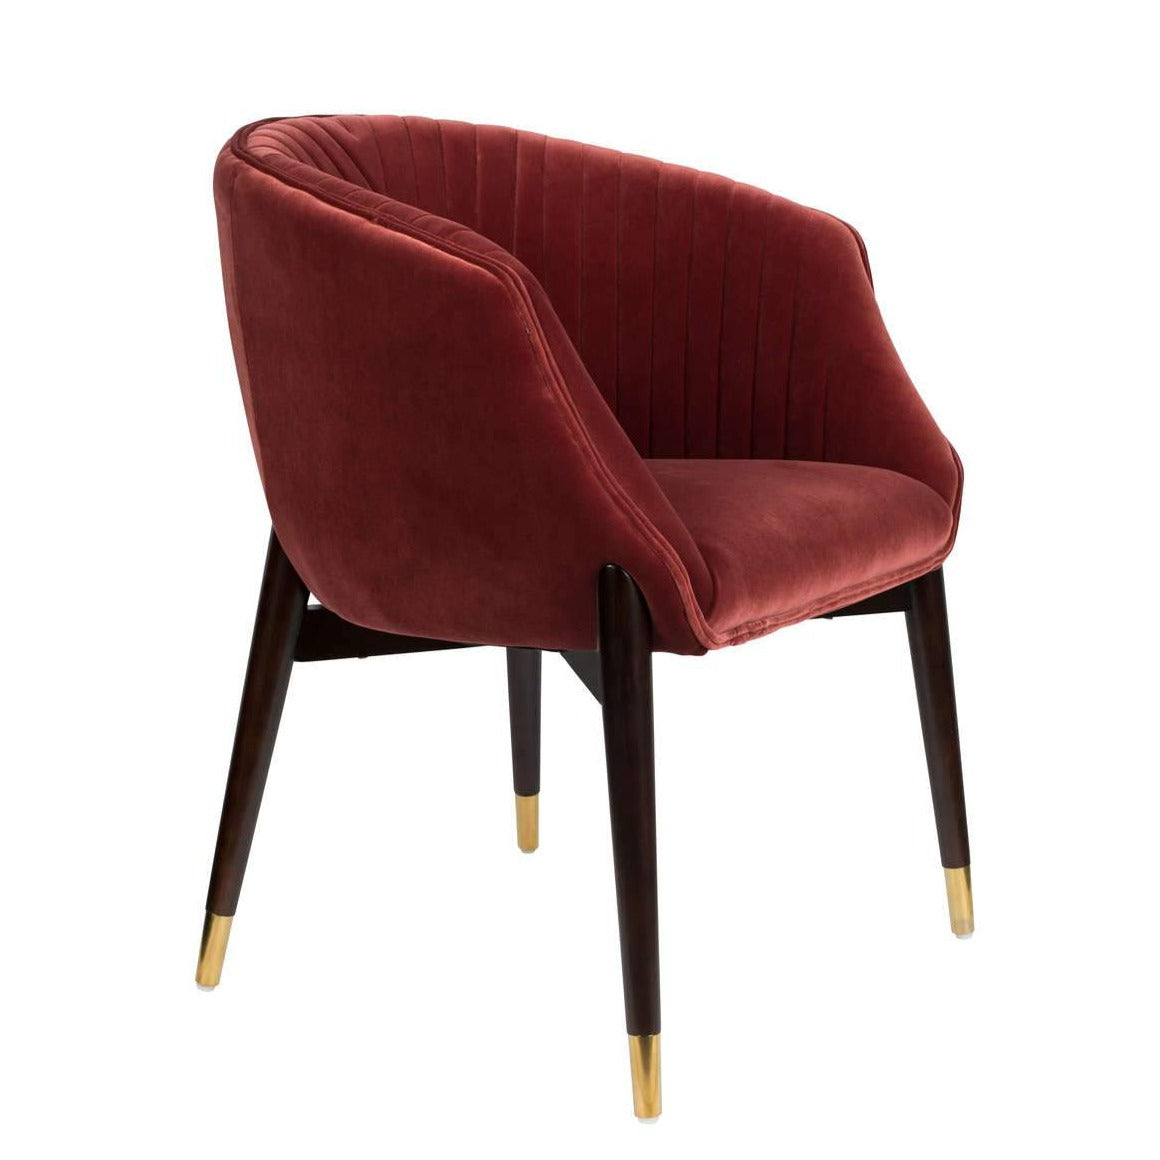 DOLLY armchair maroon, Dutchbone, Eye on Design